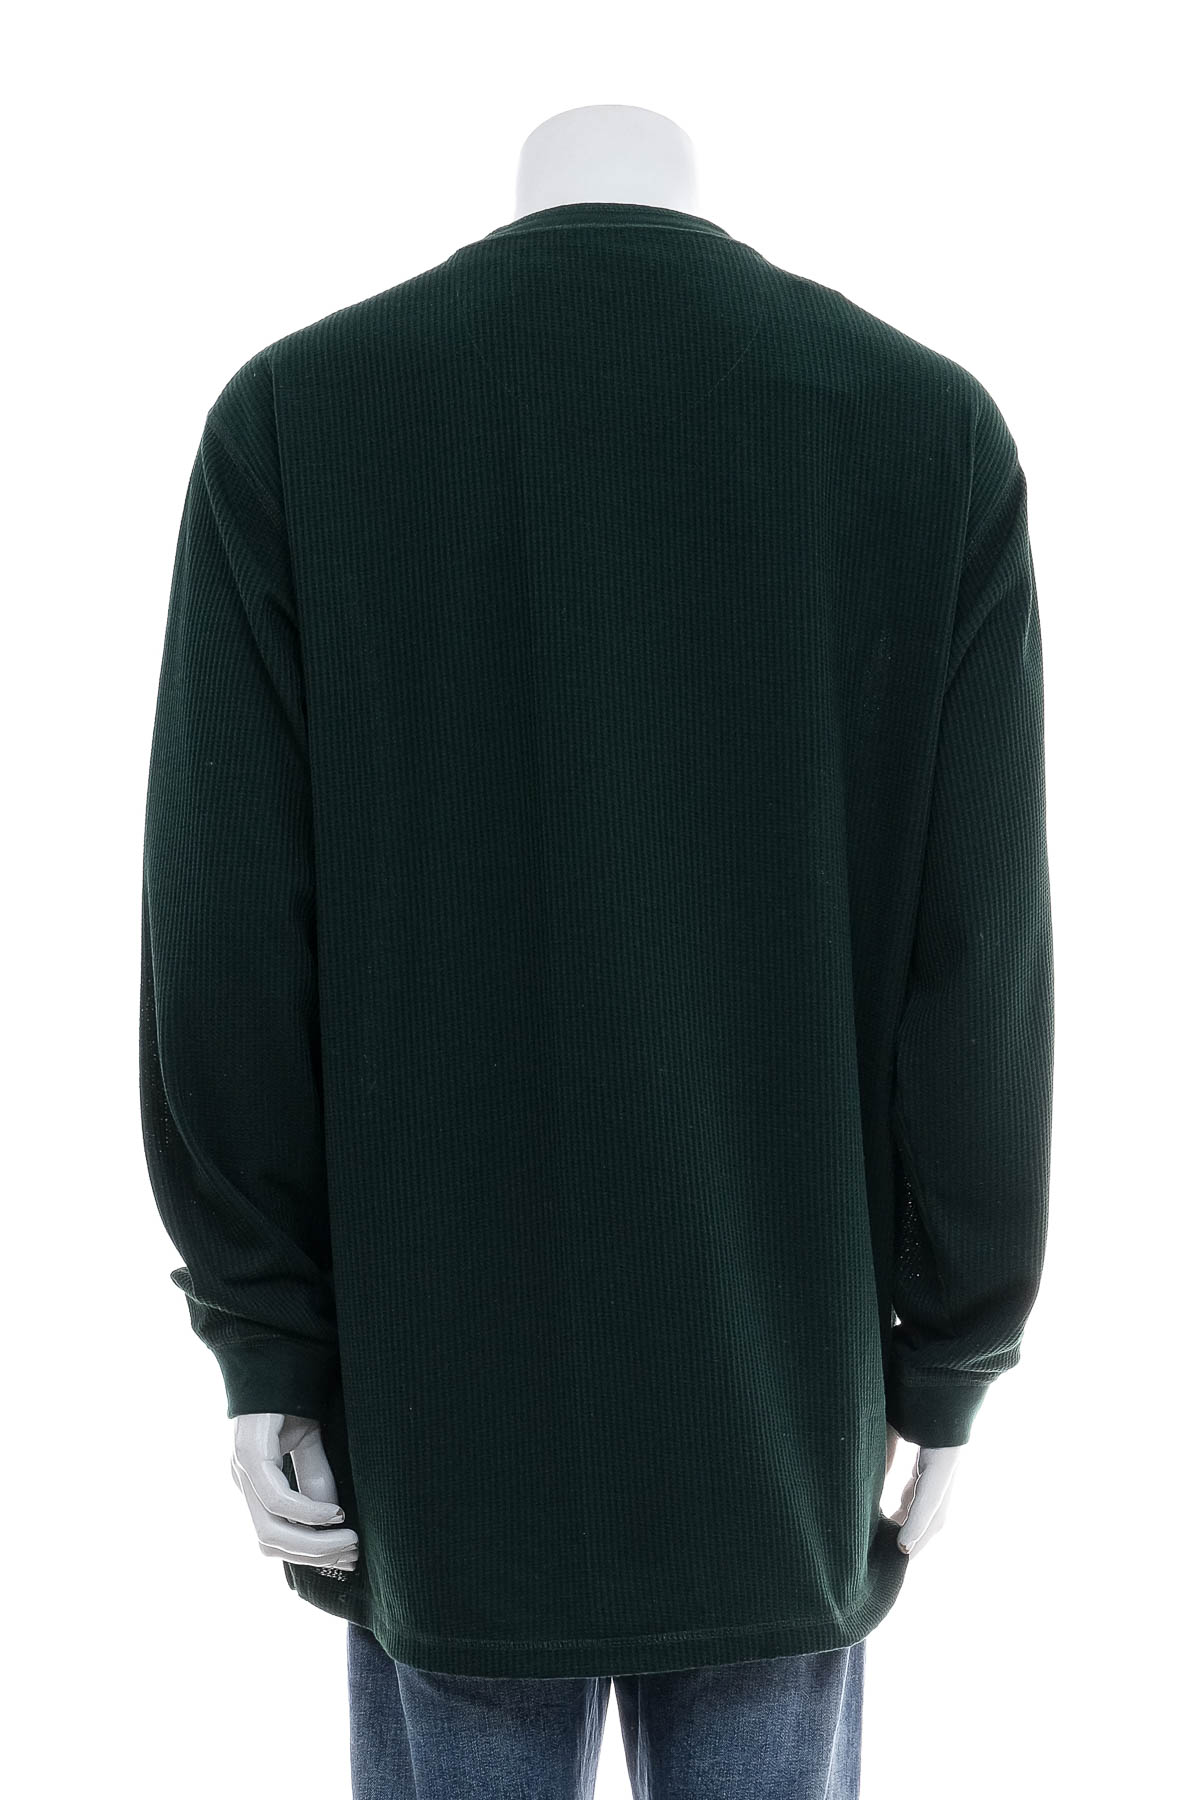 Men's sweater - ALPINE LAKES - 1